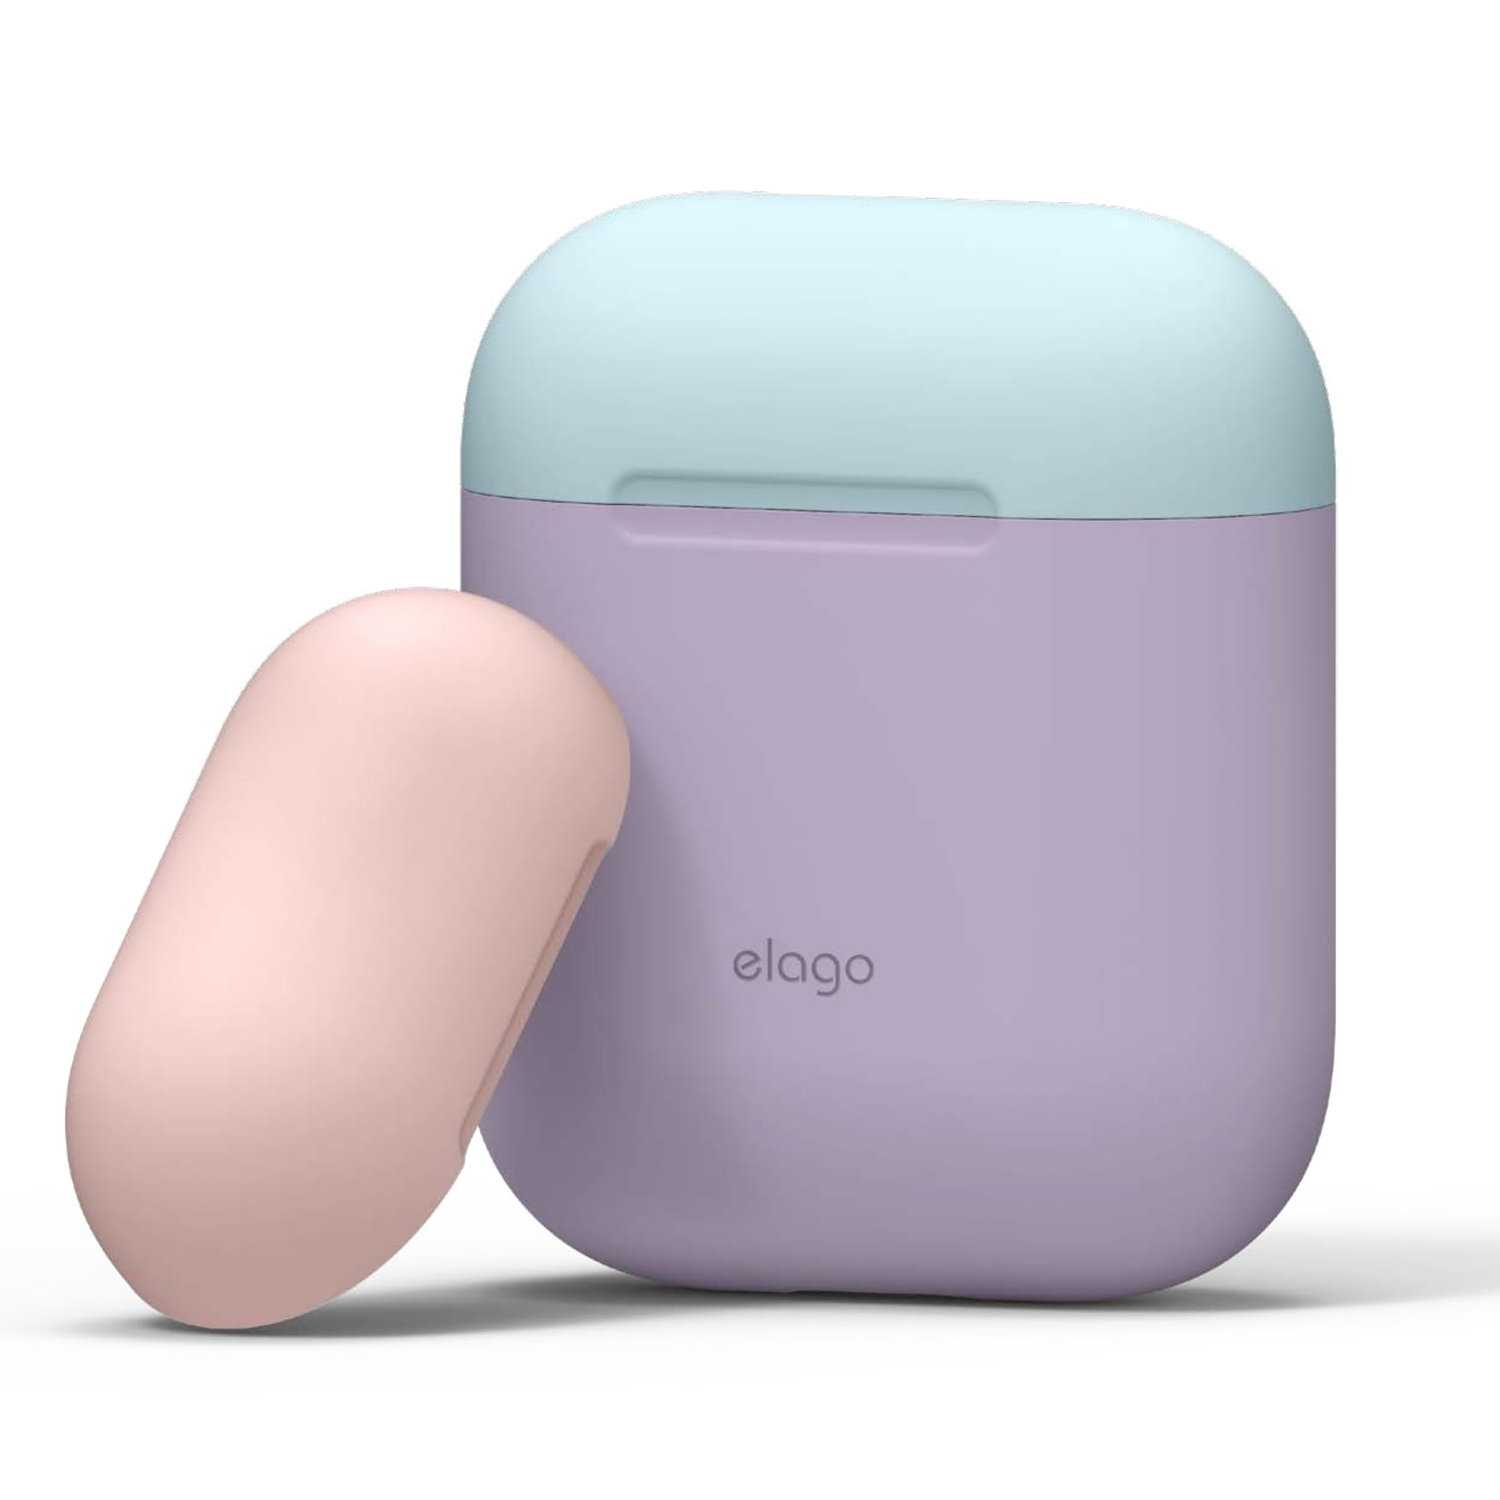 Elago AirPods Duo Case Body Lavender/Top Pink Pastel Blue